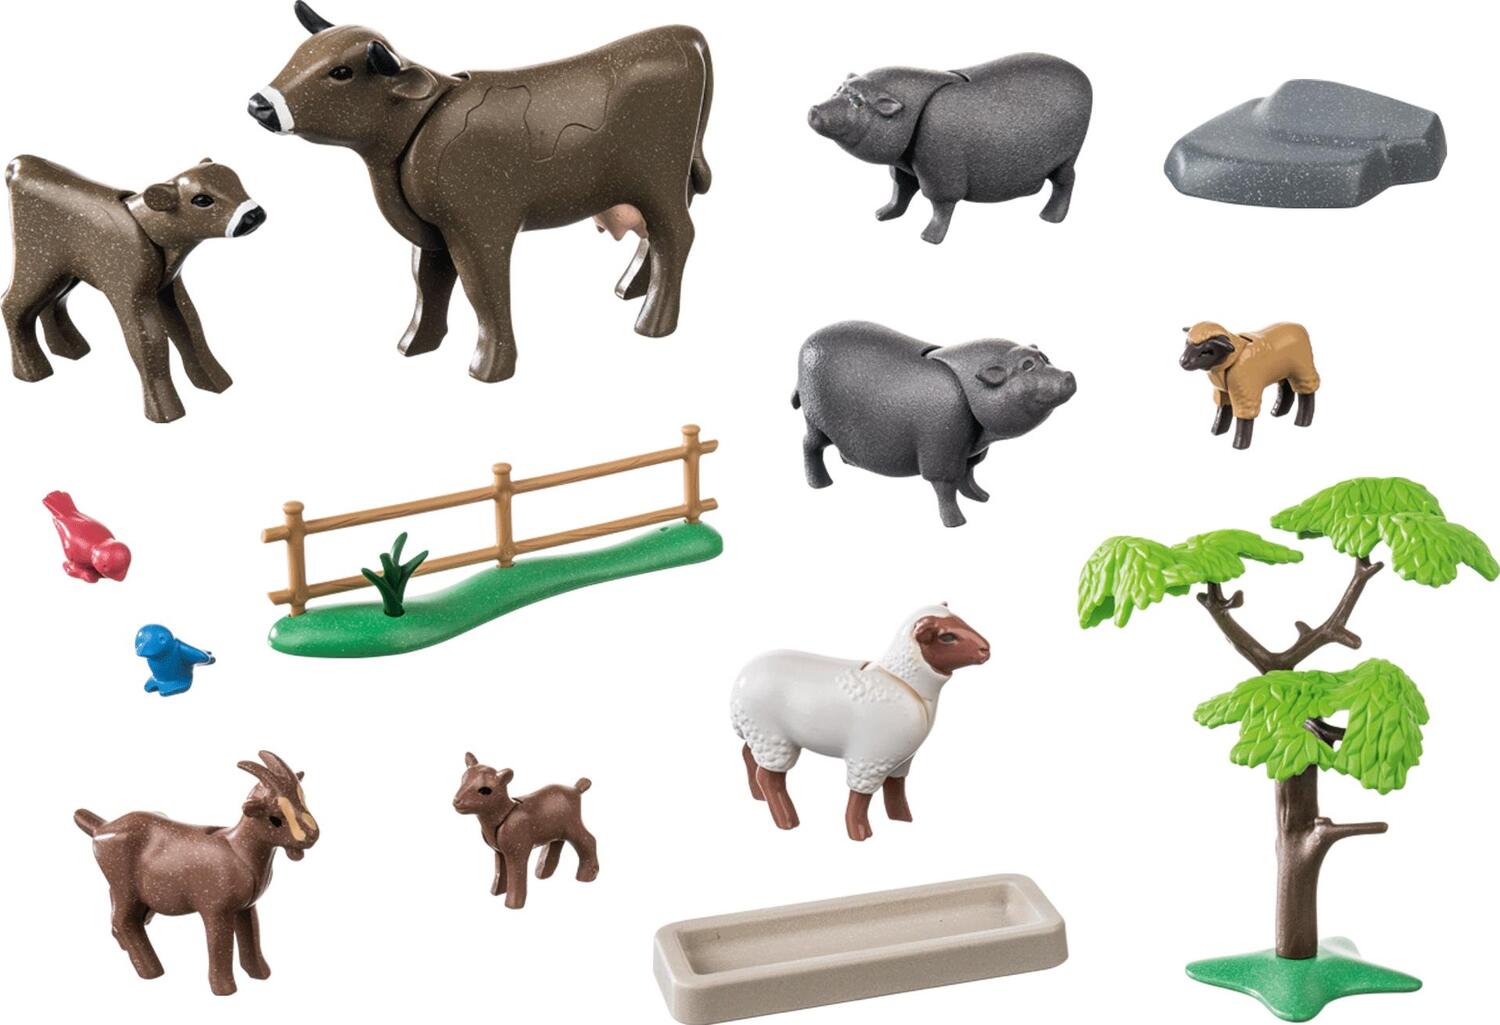 Playmobil Animal Enclosure - The Toy Box Hanover